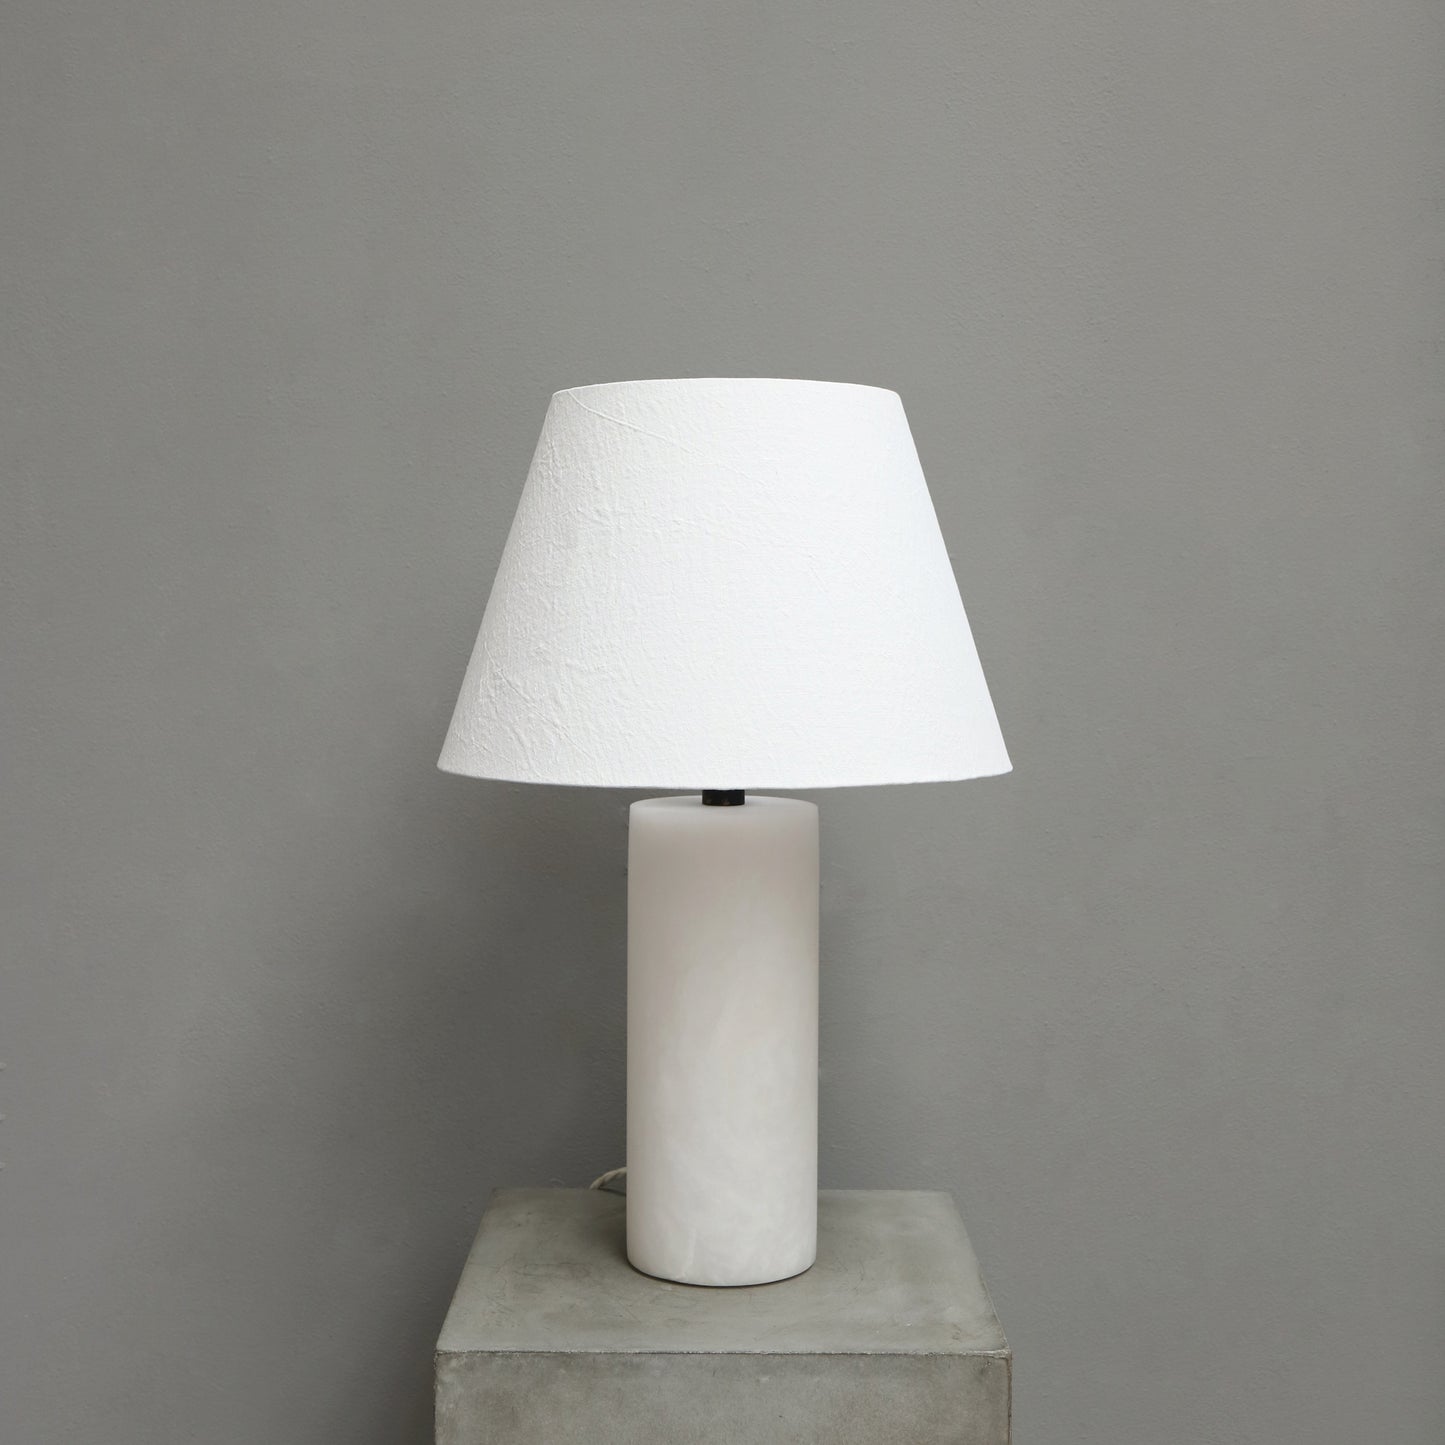 "Panser Petite Lamp" by Michaël Verheyden